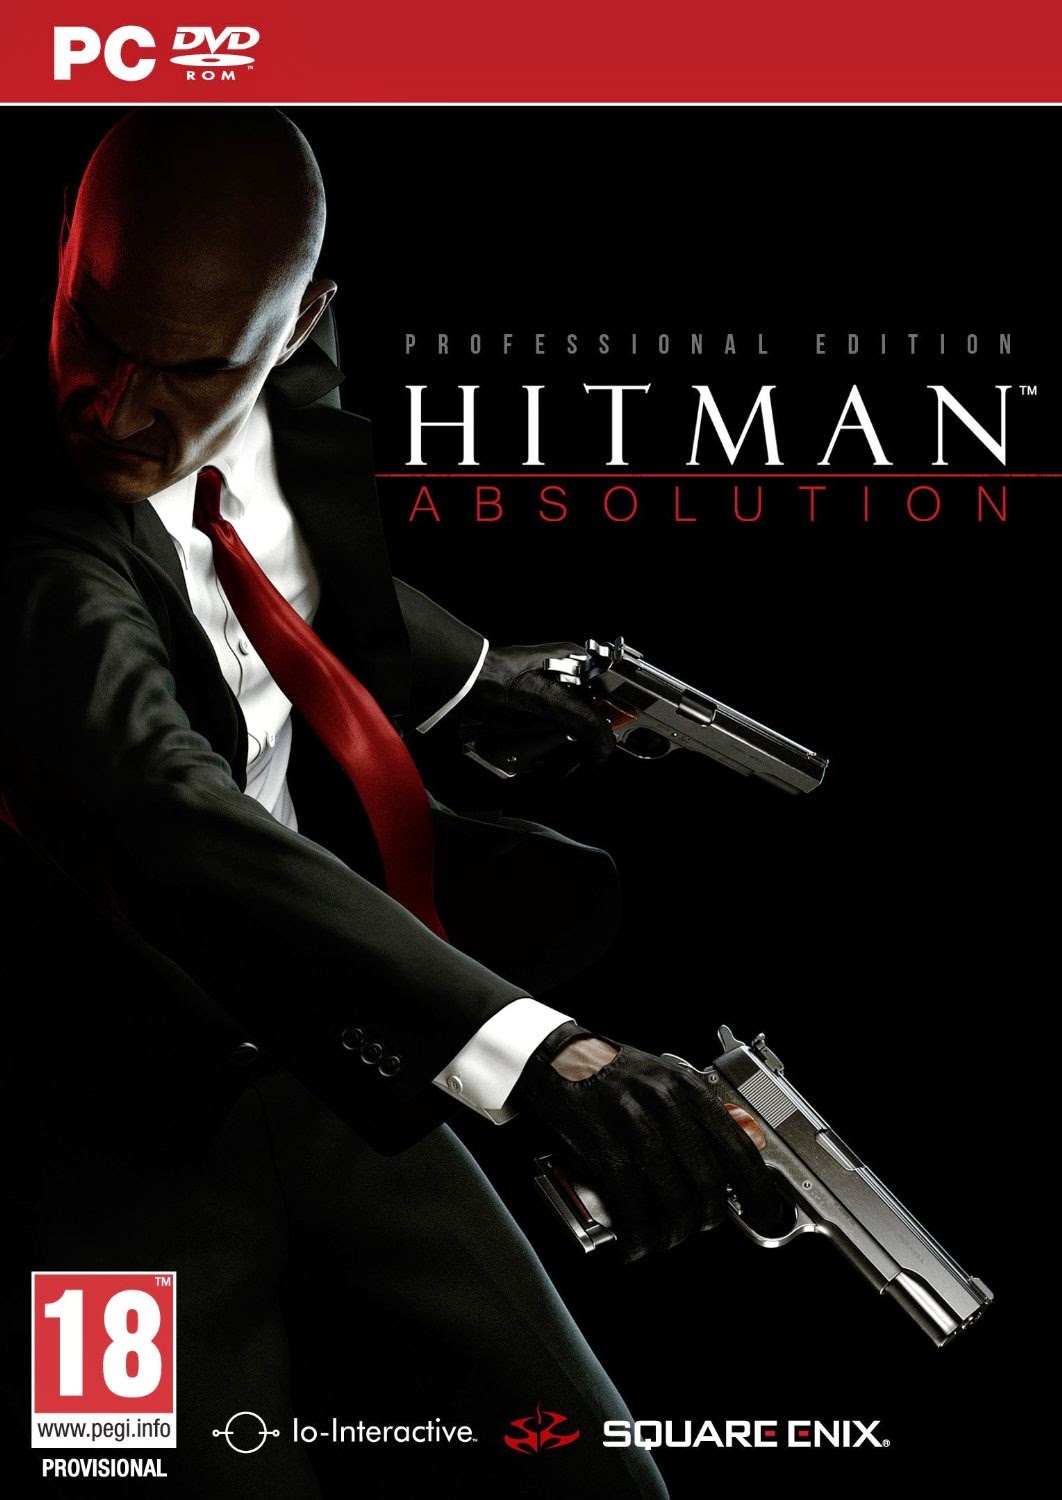 hitman pro full version free download